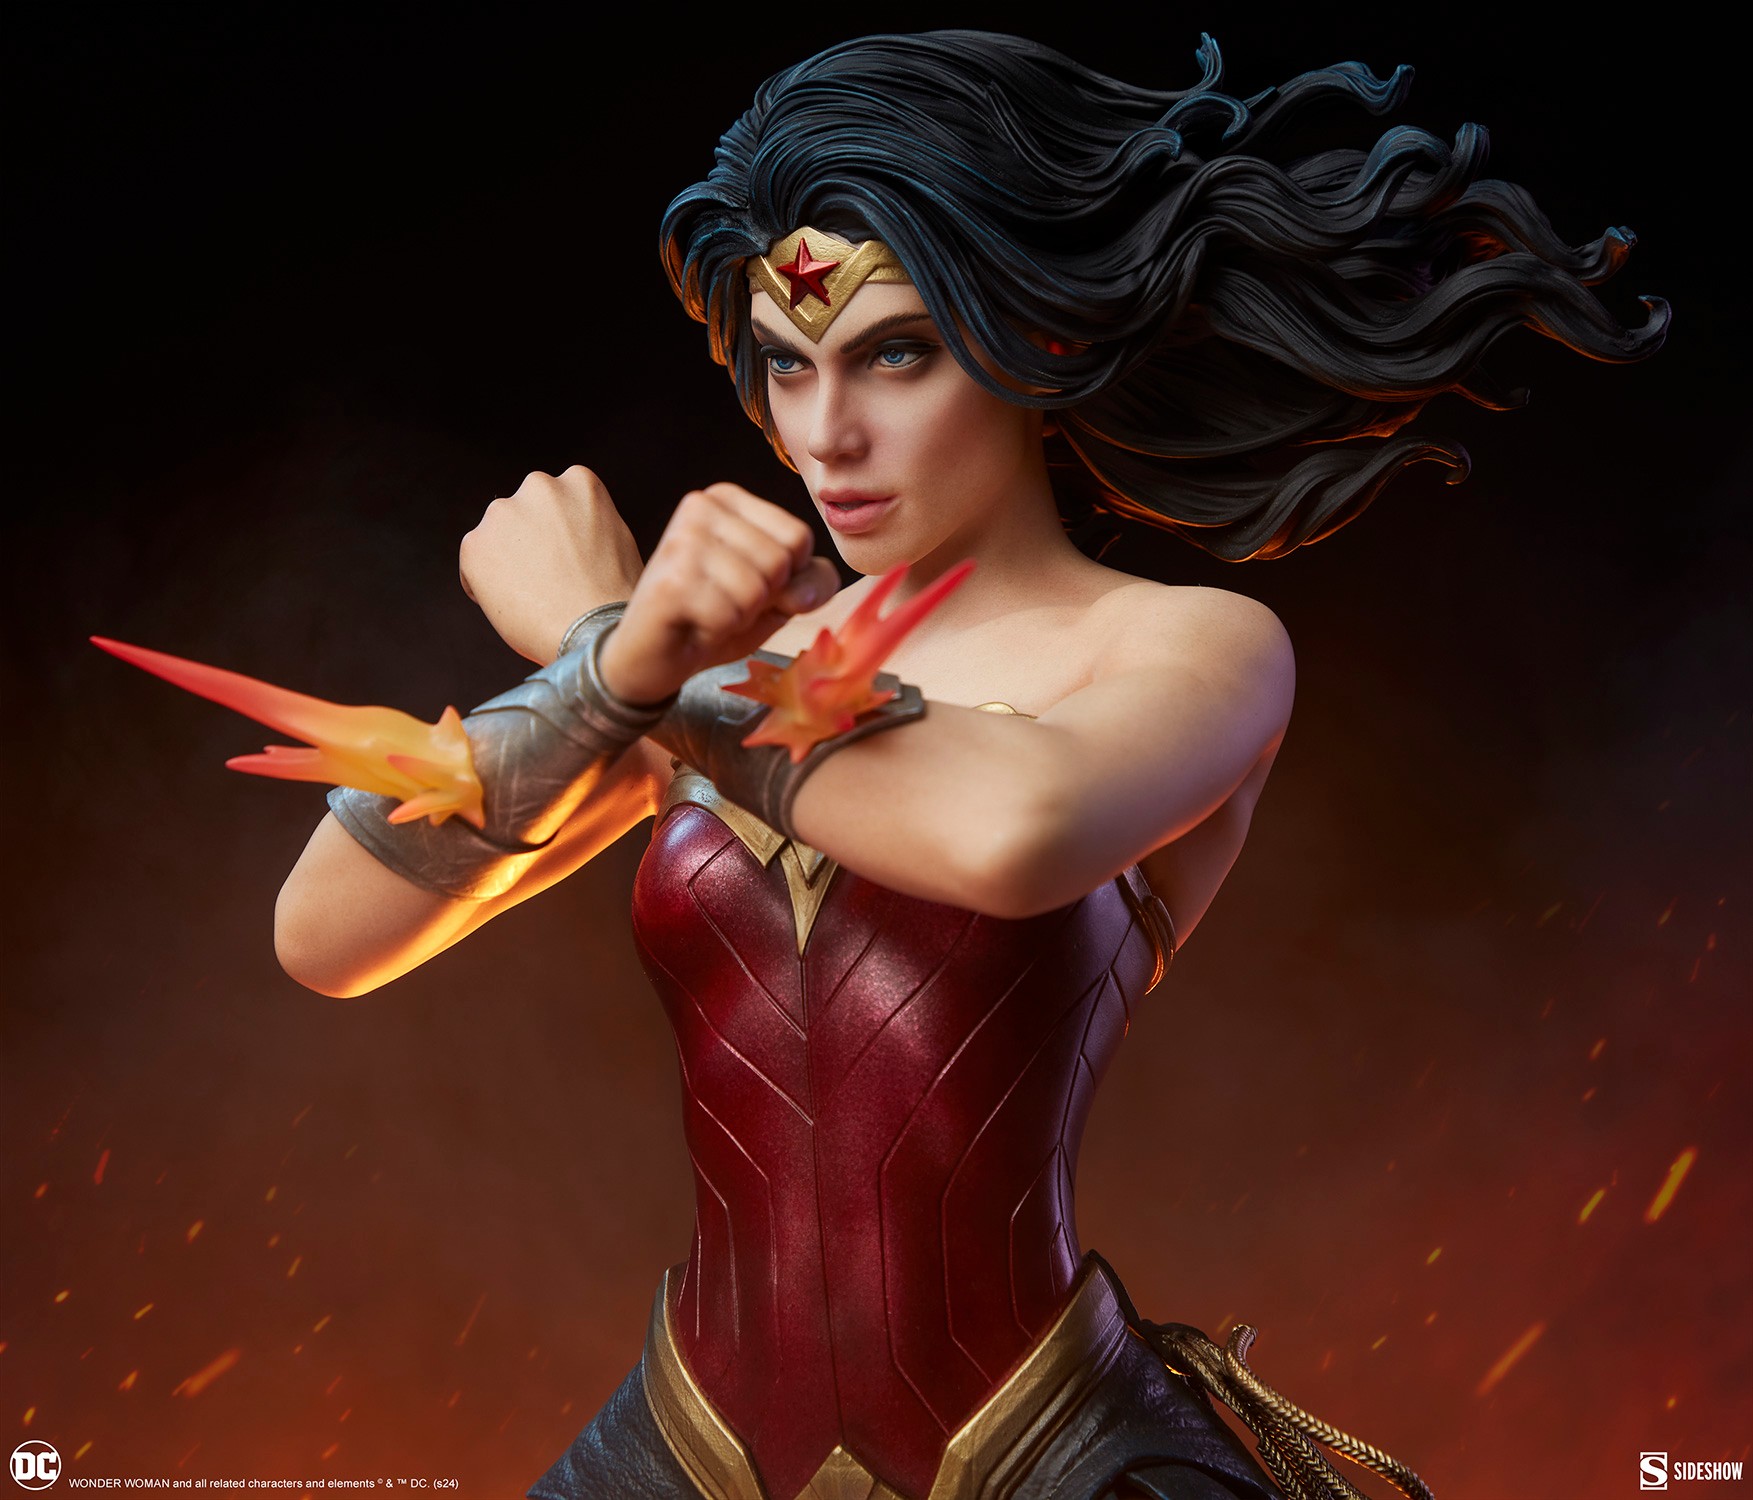 Wonder Woman: Saving the Day (Prototype Shown) View 4